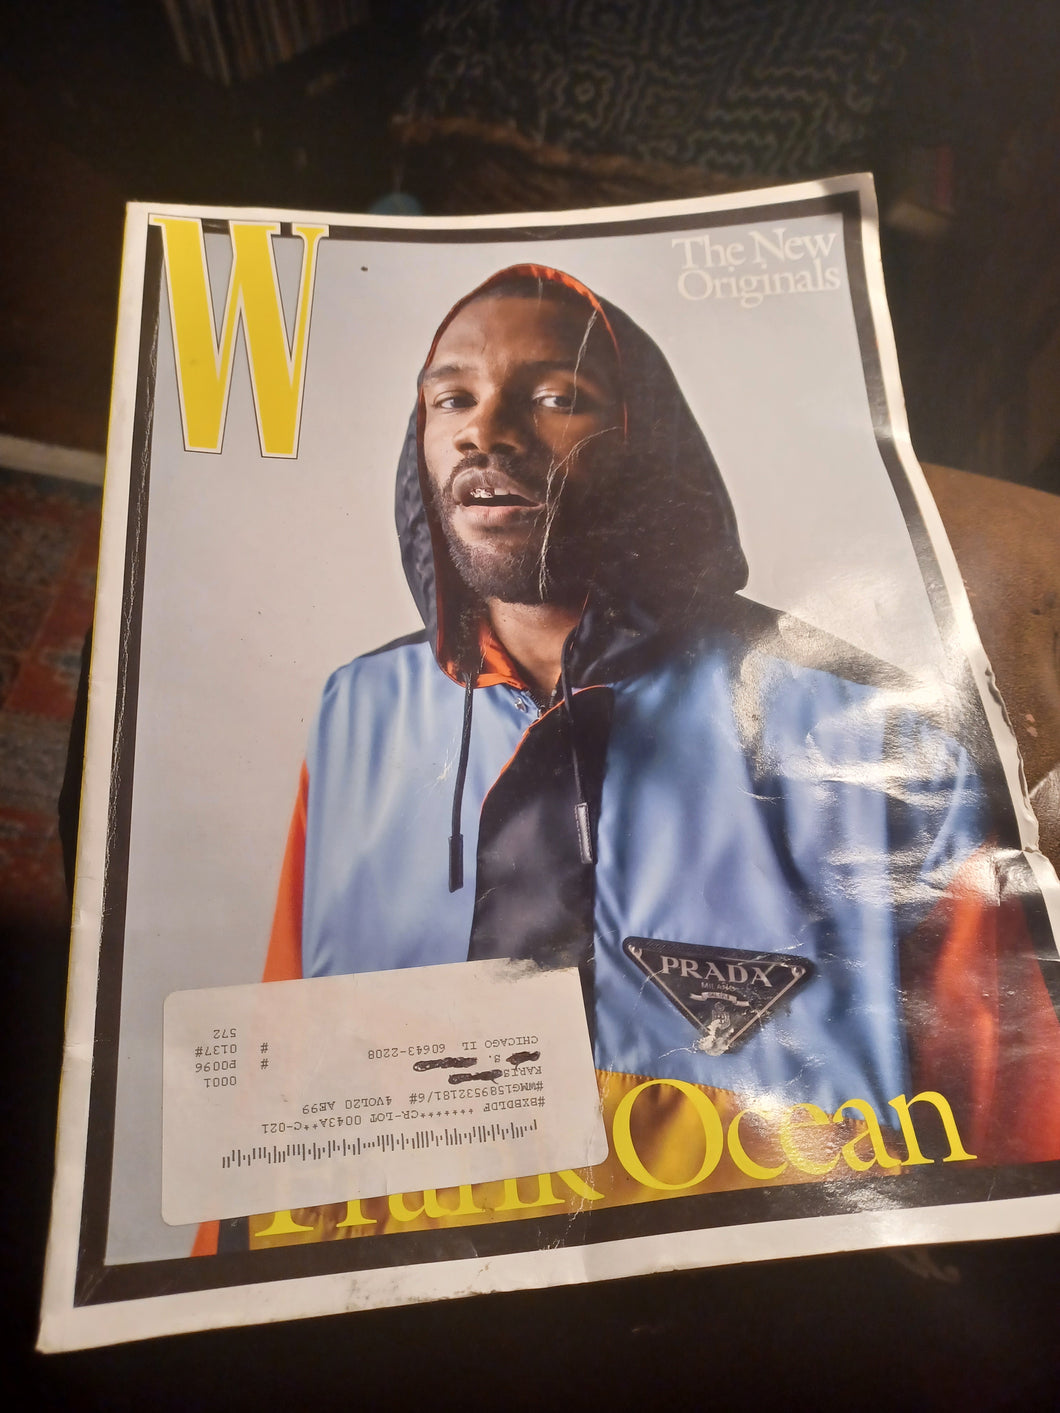 W Magazine Volume 6 2019 The New Originals Frank Ocean